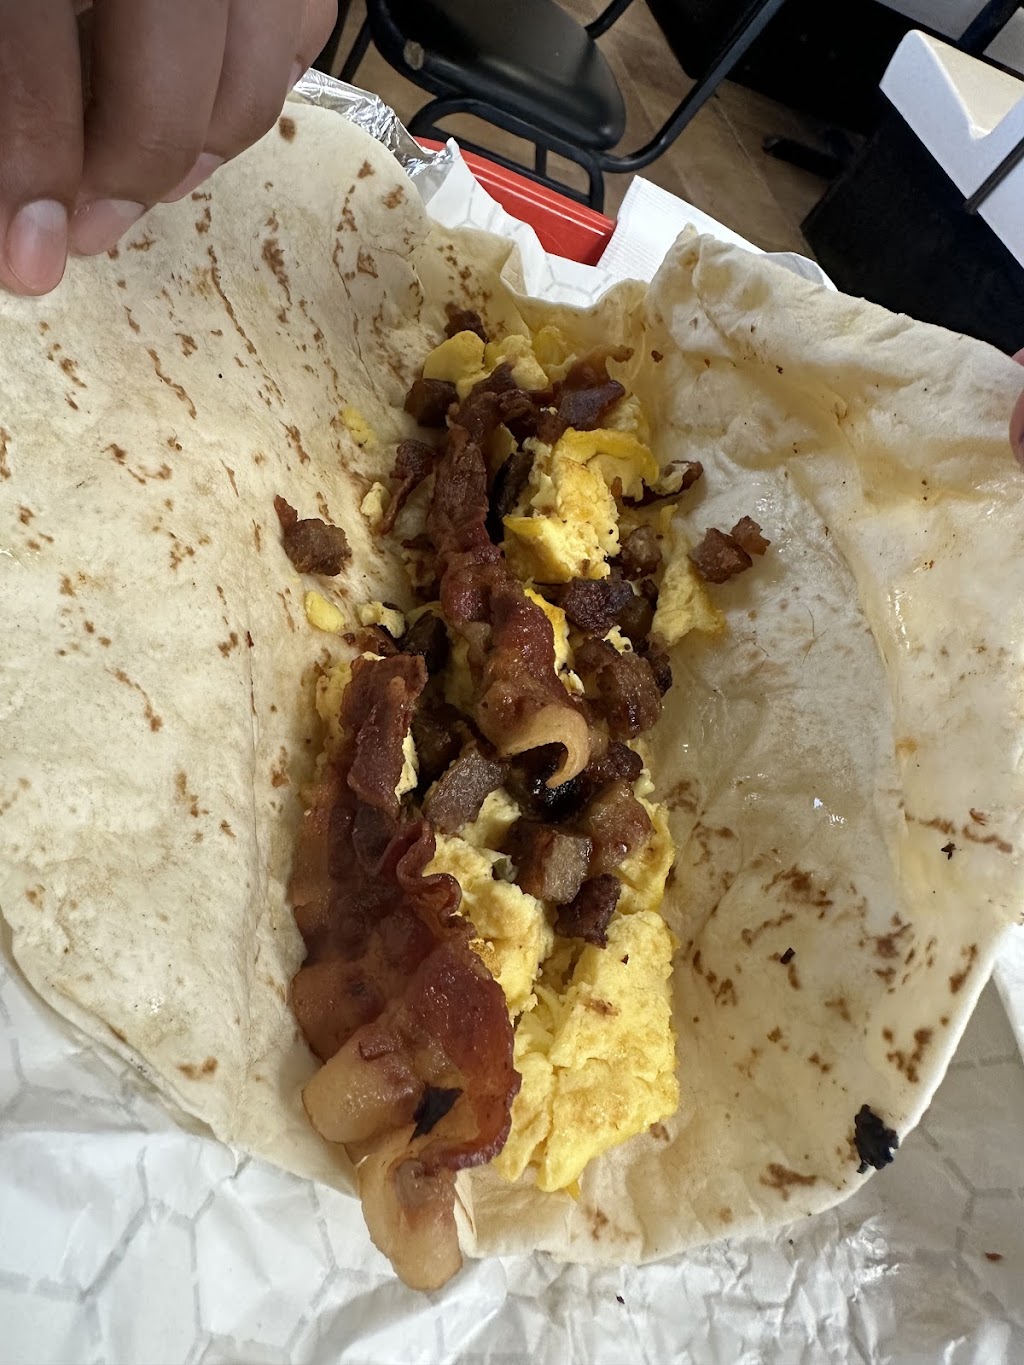 Aralyns Breakfast & Burritos | 1207 E Main St, Itasca, TX 76055, USA | Phone: (214) 982-9988